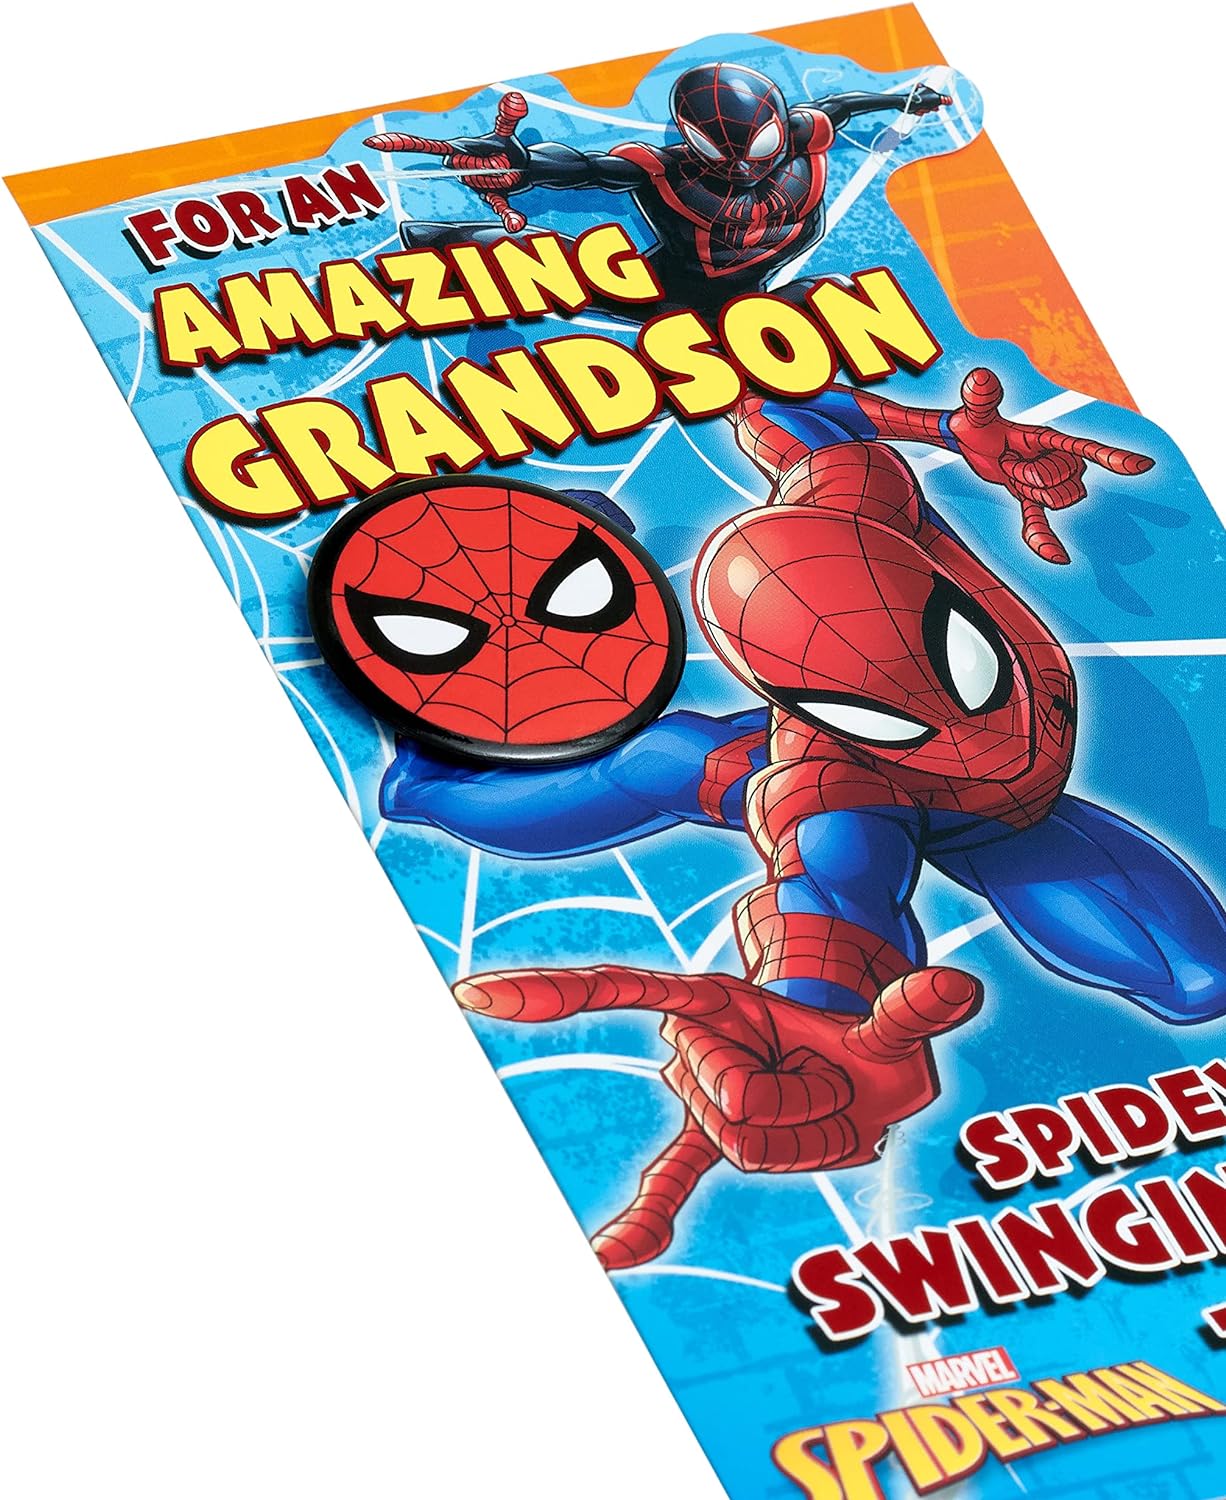 Marvel Spider-Man Grandson Birthday Card with Badge